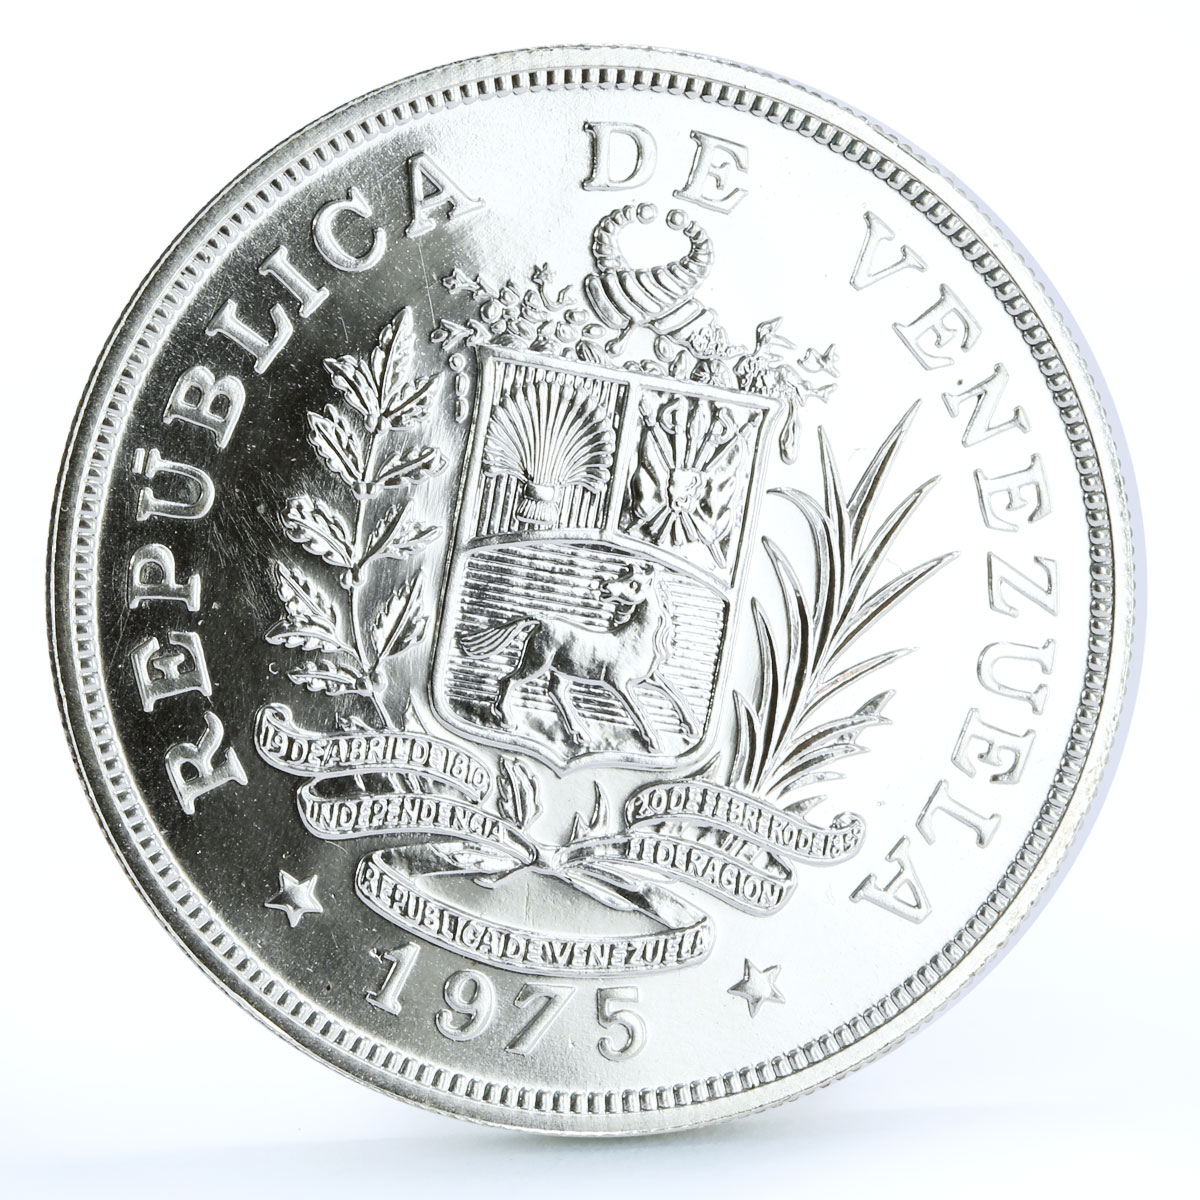 Venezuela 50 bolivares Endangered Wildlife Giant Armadillo silver coin 1975